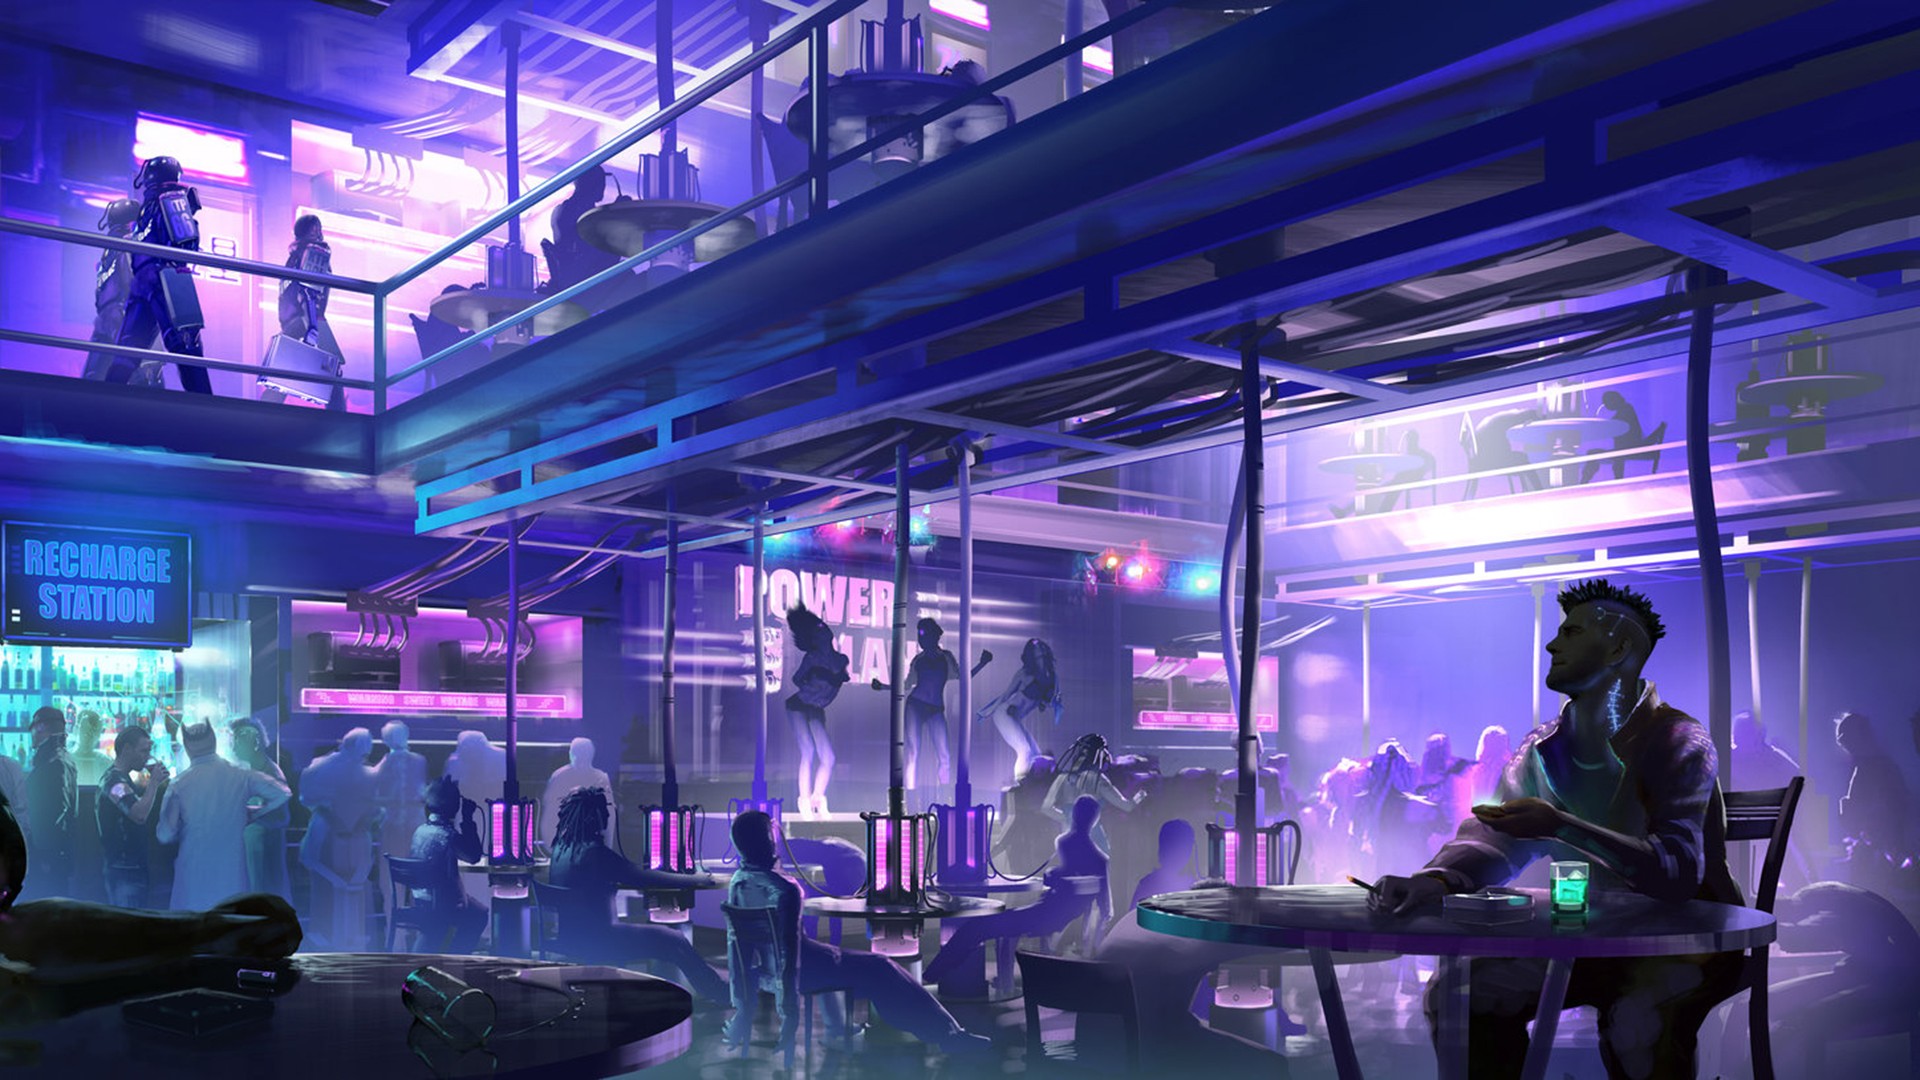 General 1920x1080 digital art clubs artwork futuristic science fiction purple cyberpunk